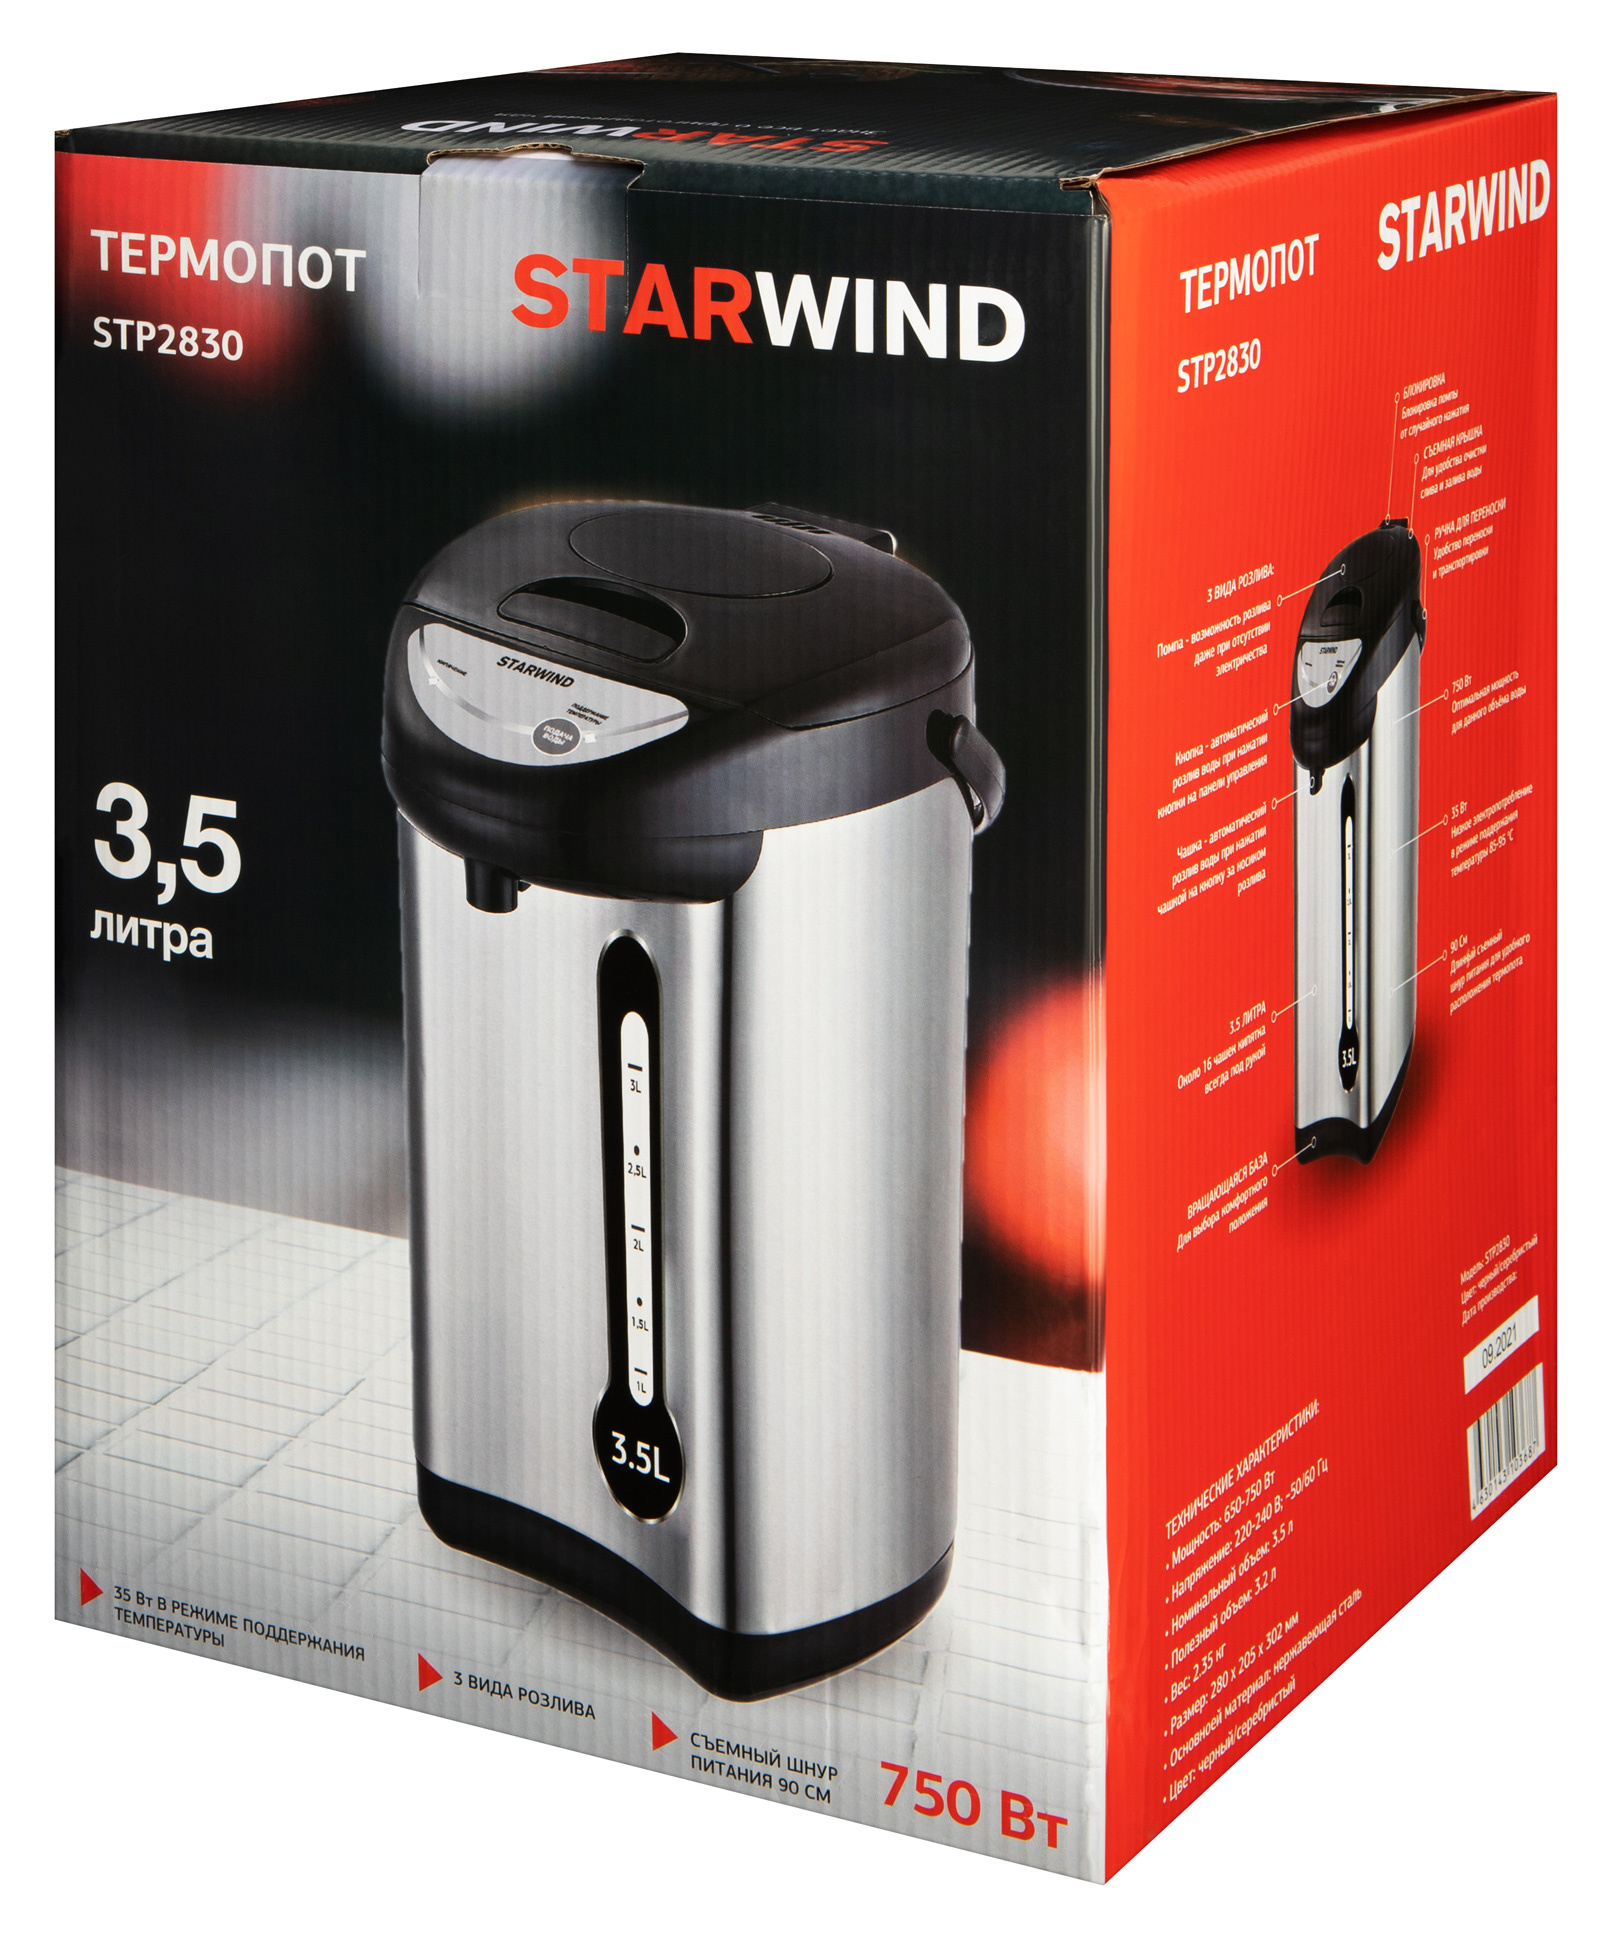 Термопот Starwind STP2830 серебристый/черный от магазина Старвинд